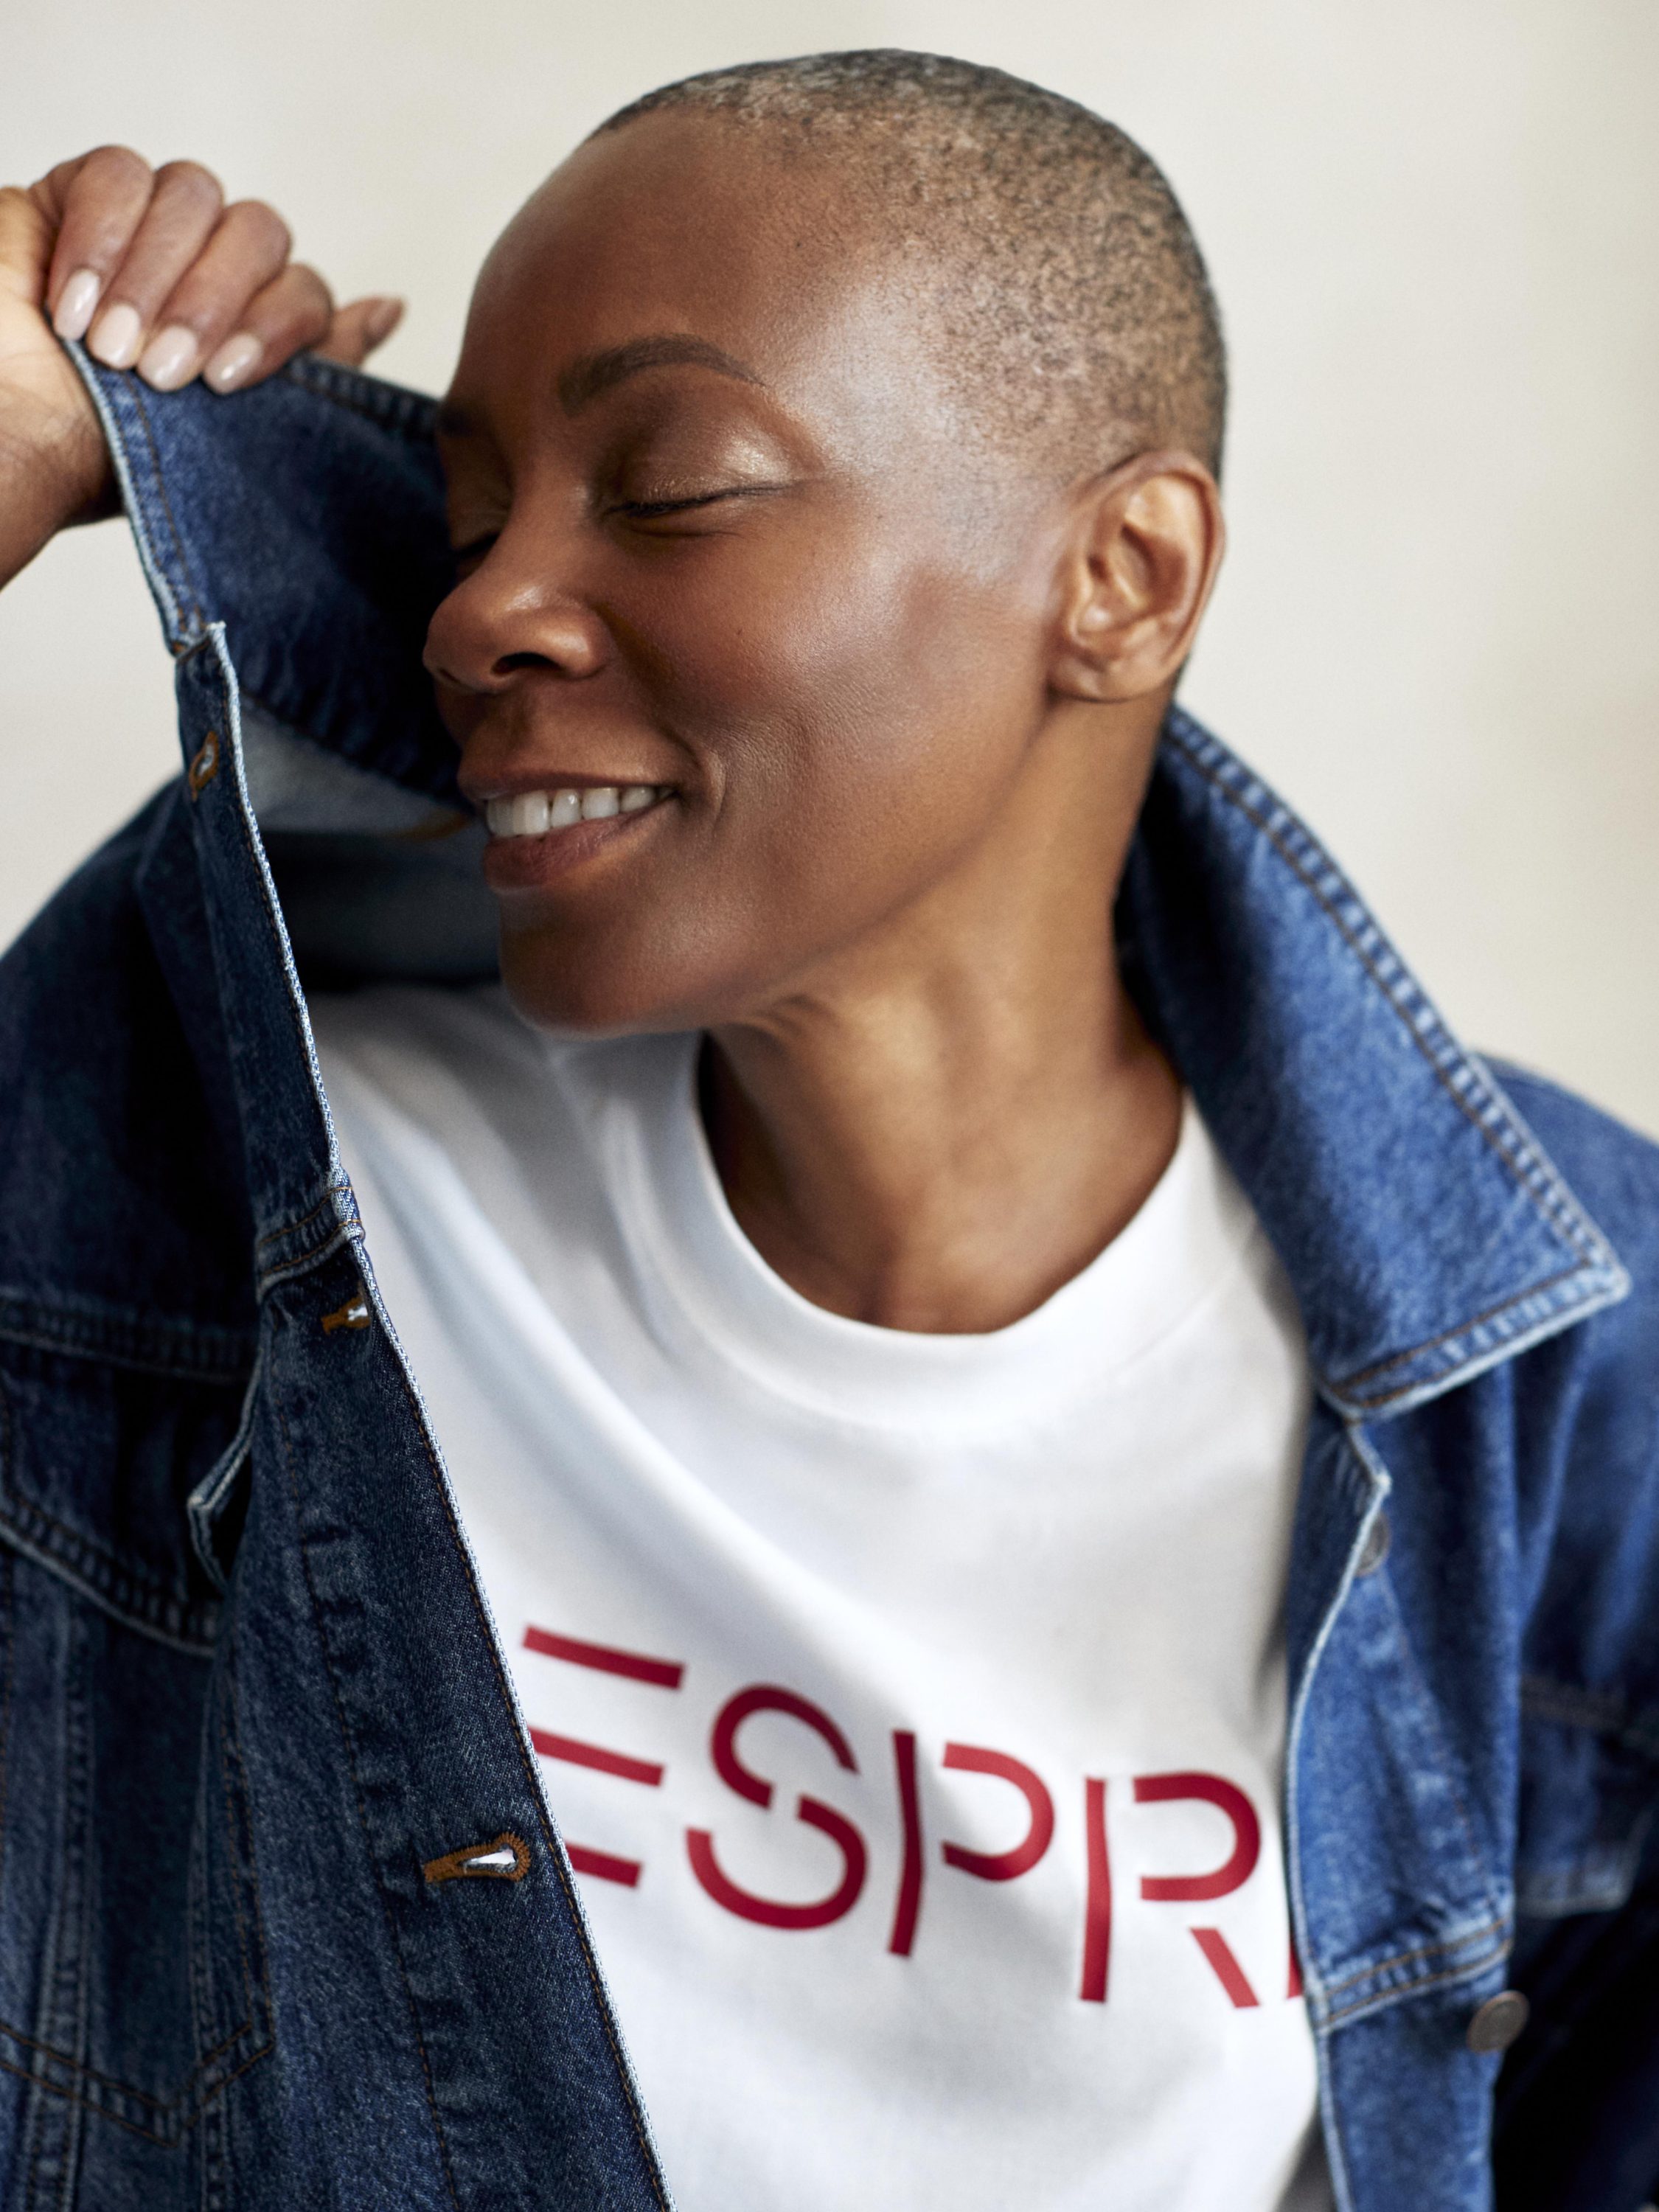 Esprit's Spring 2023 Campaign Celebrates Self-Expression